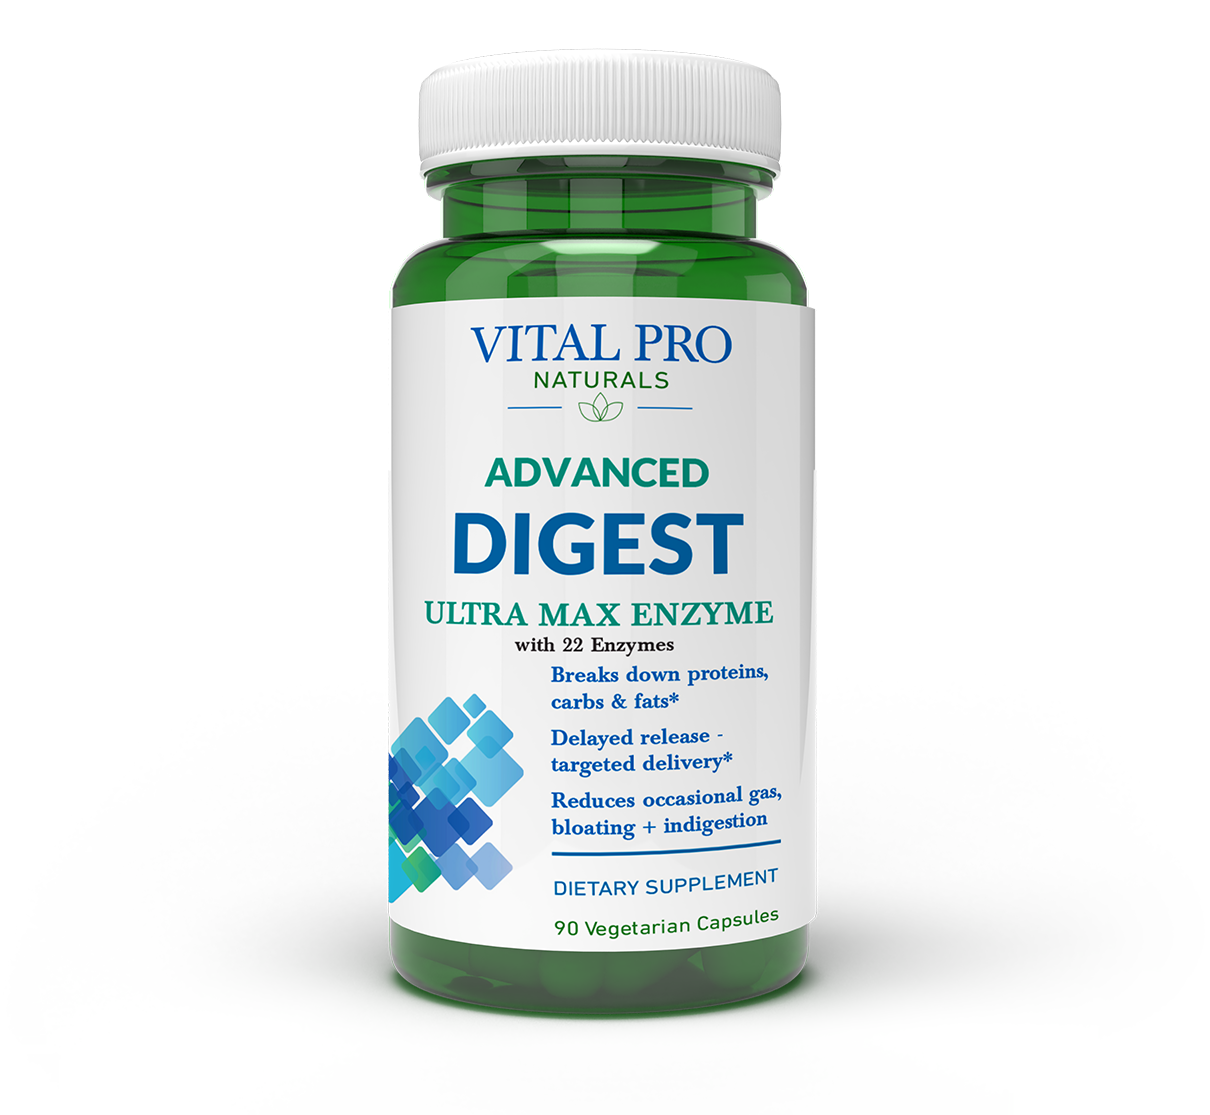 Vital Pro Naturals Advanced Digest